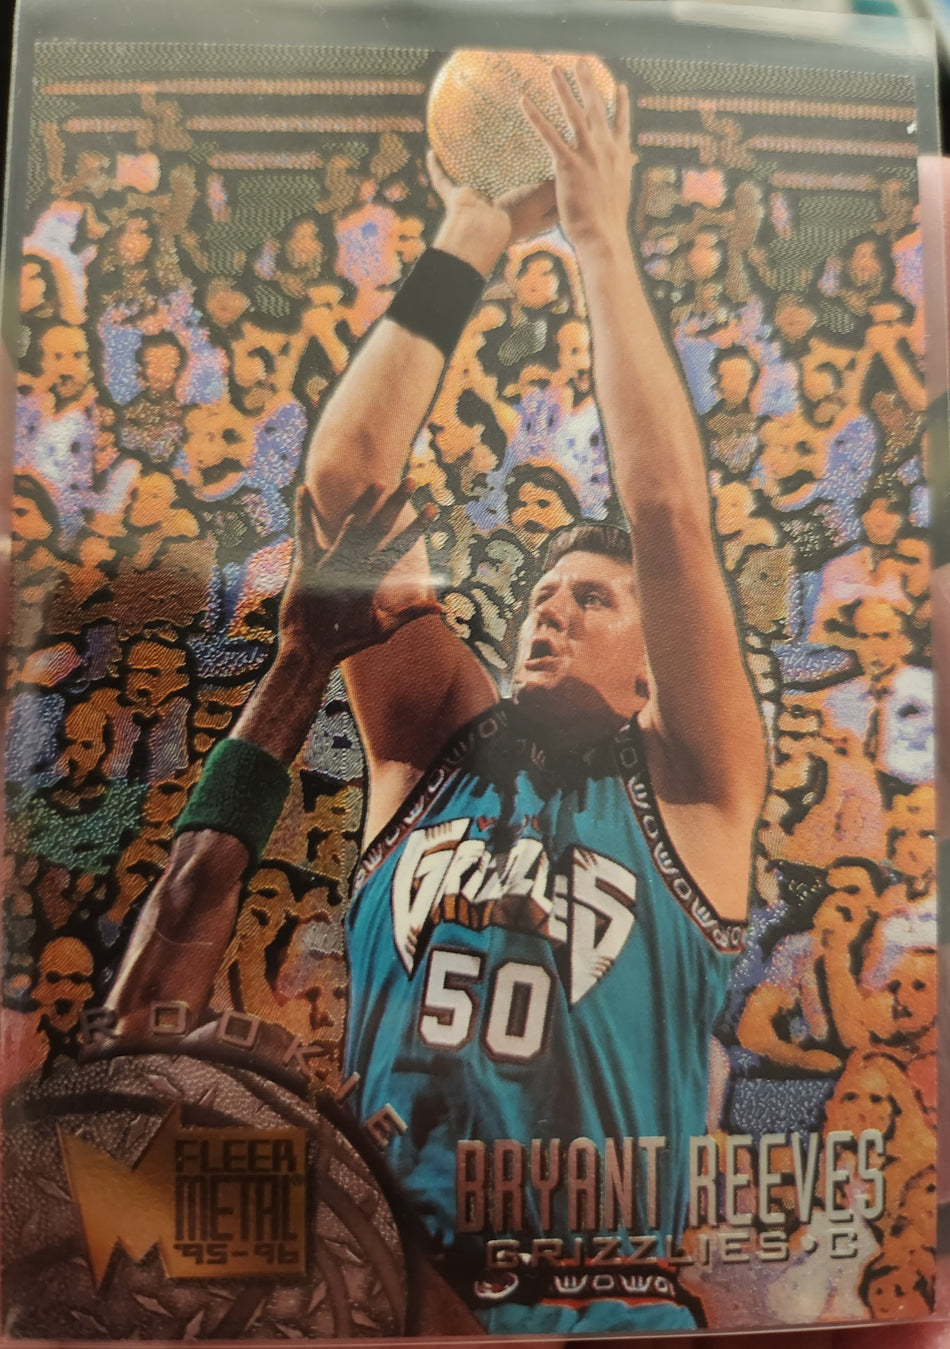 1995-96 Metal Vancouver Grizzlies Basketball Card #205 Bryant Reeves Rookie